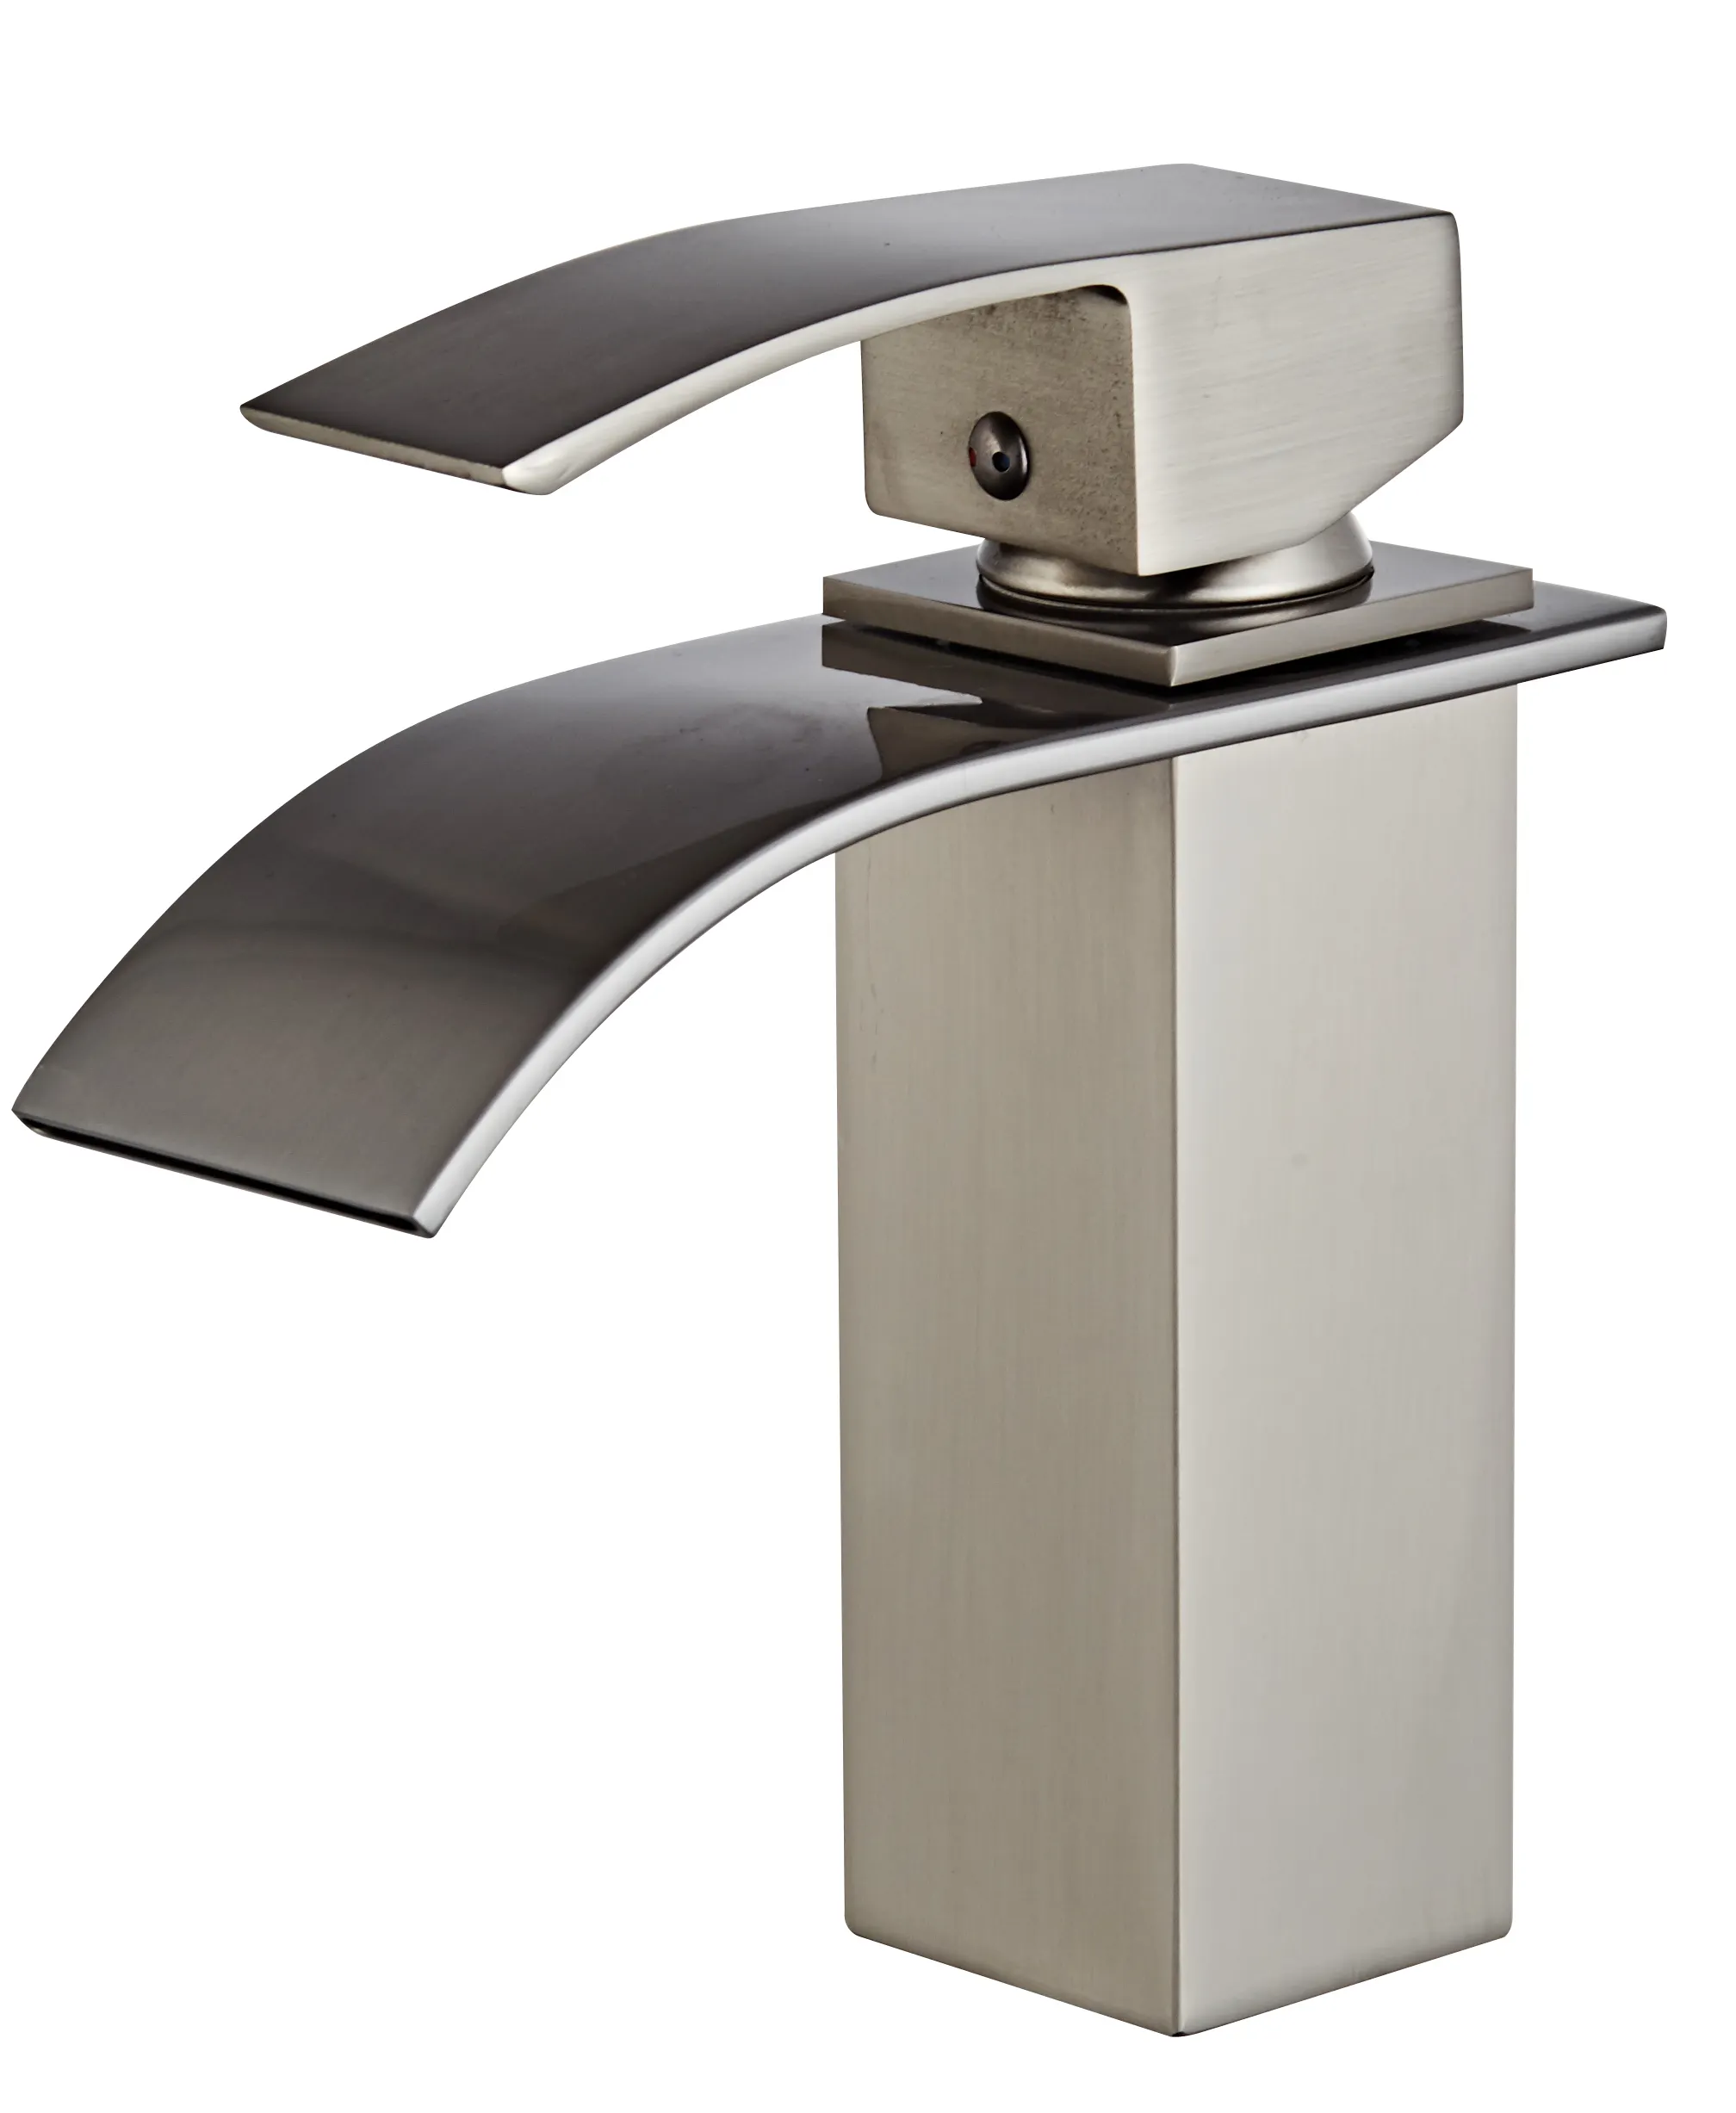 Nickel brosse bassin robinet mitigeur robinet mitigeur cascade mitigeur de lavabo